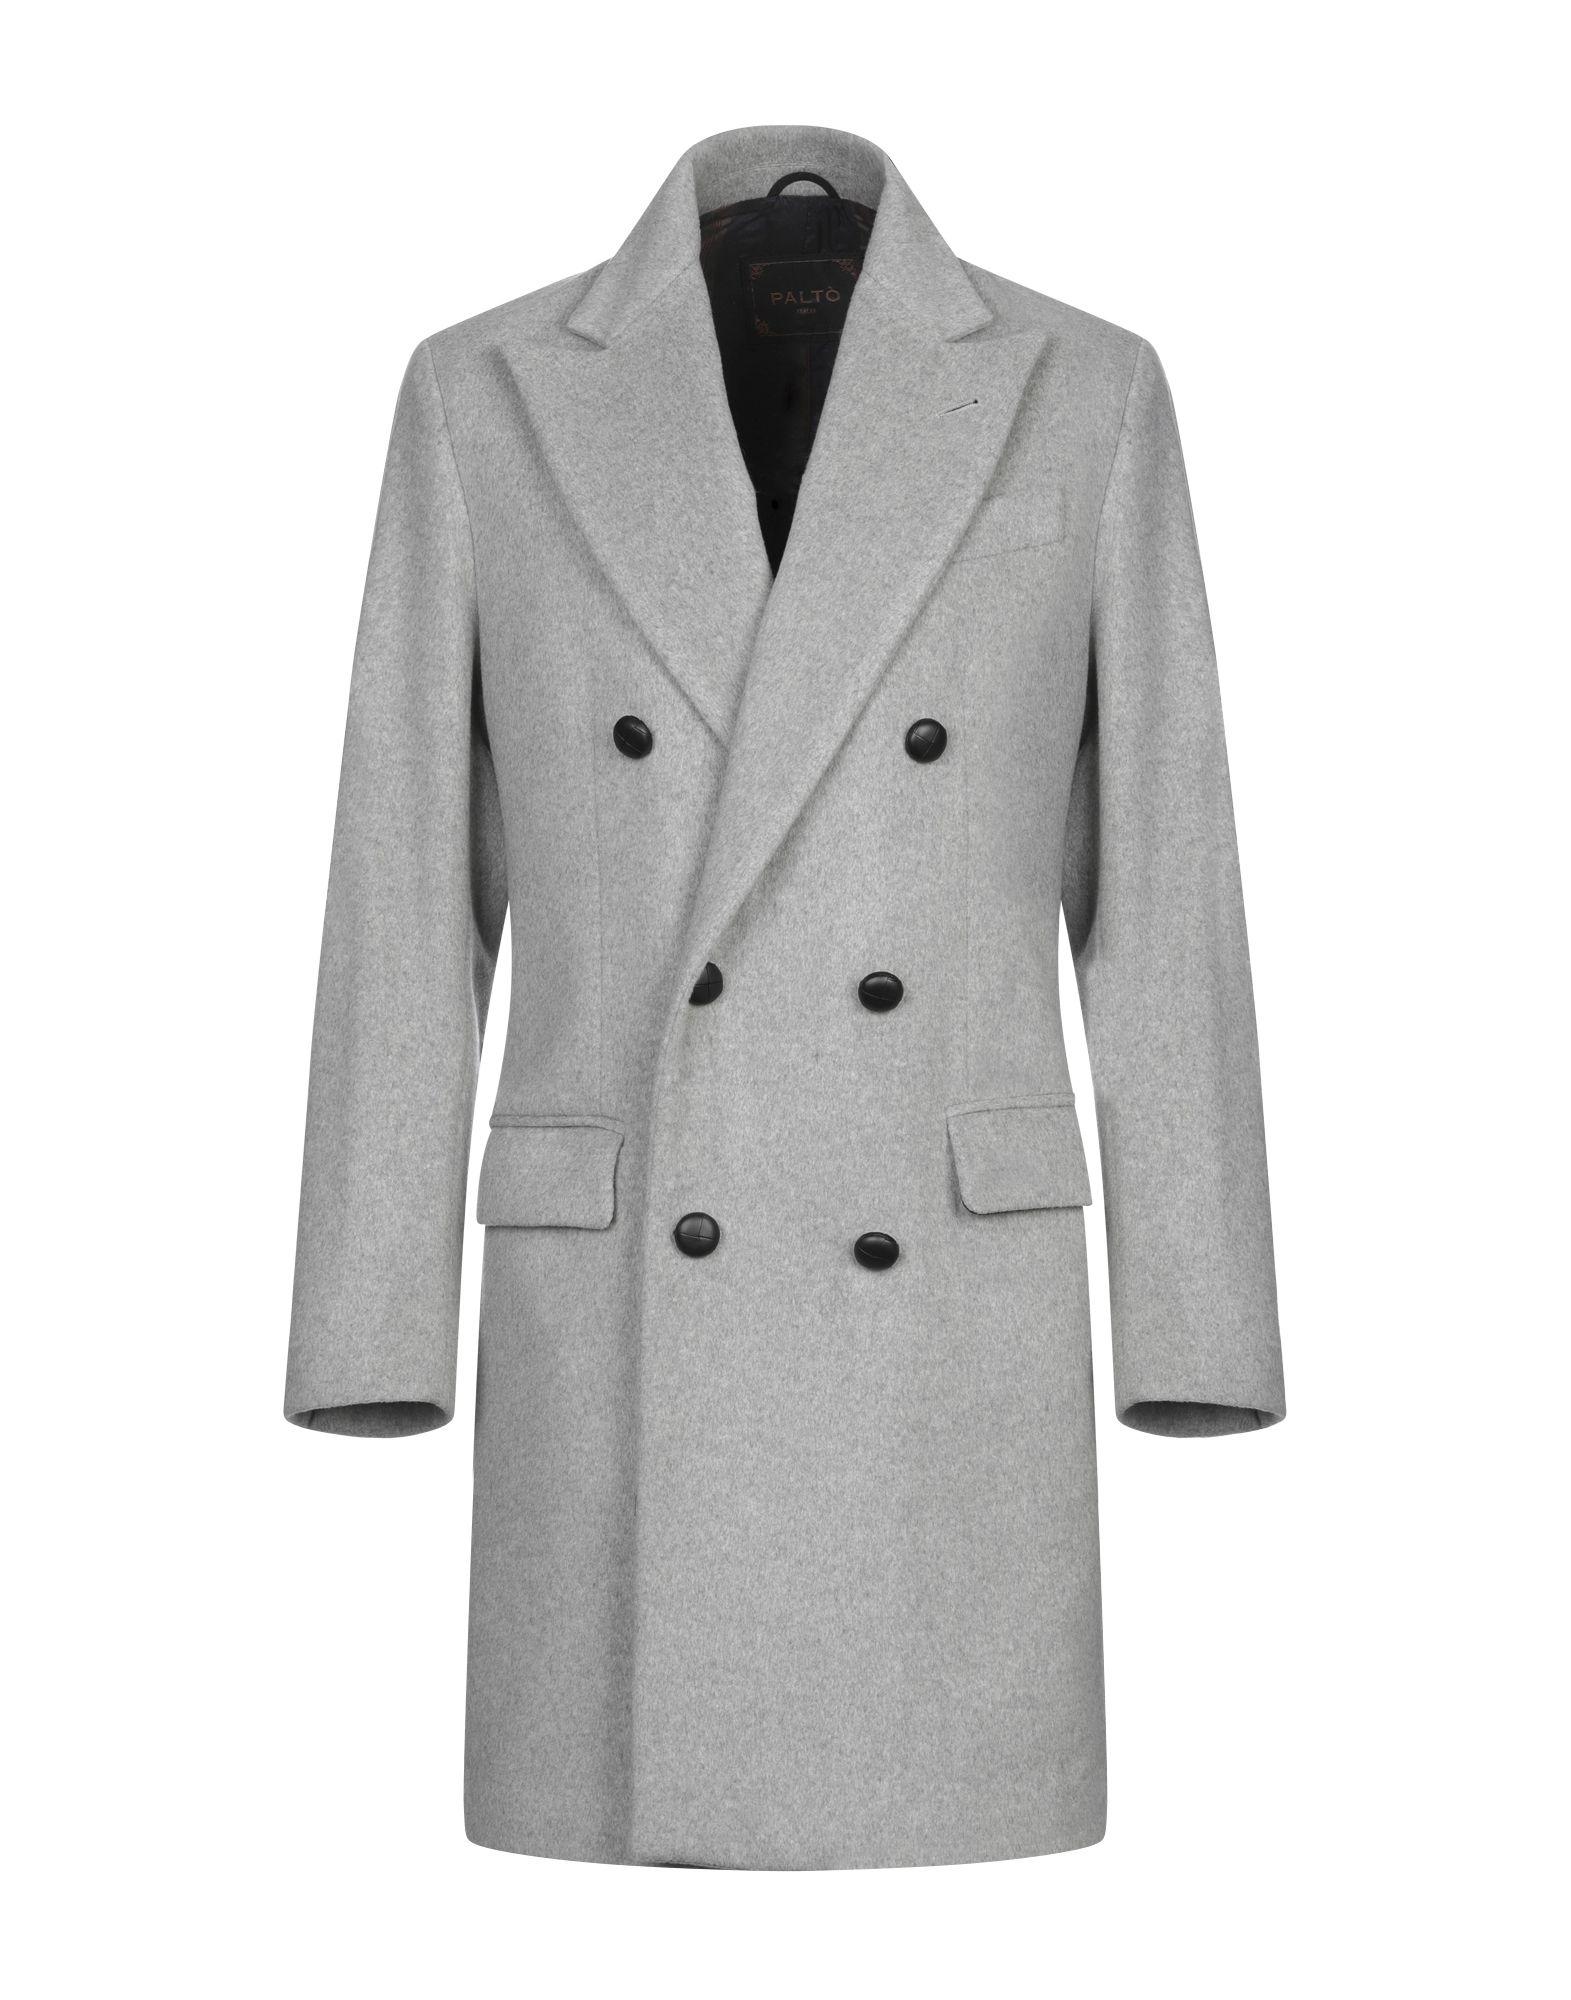 Paltò Wool Coat in Light Grey (Gray) for Men - Lyst